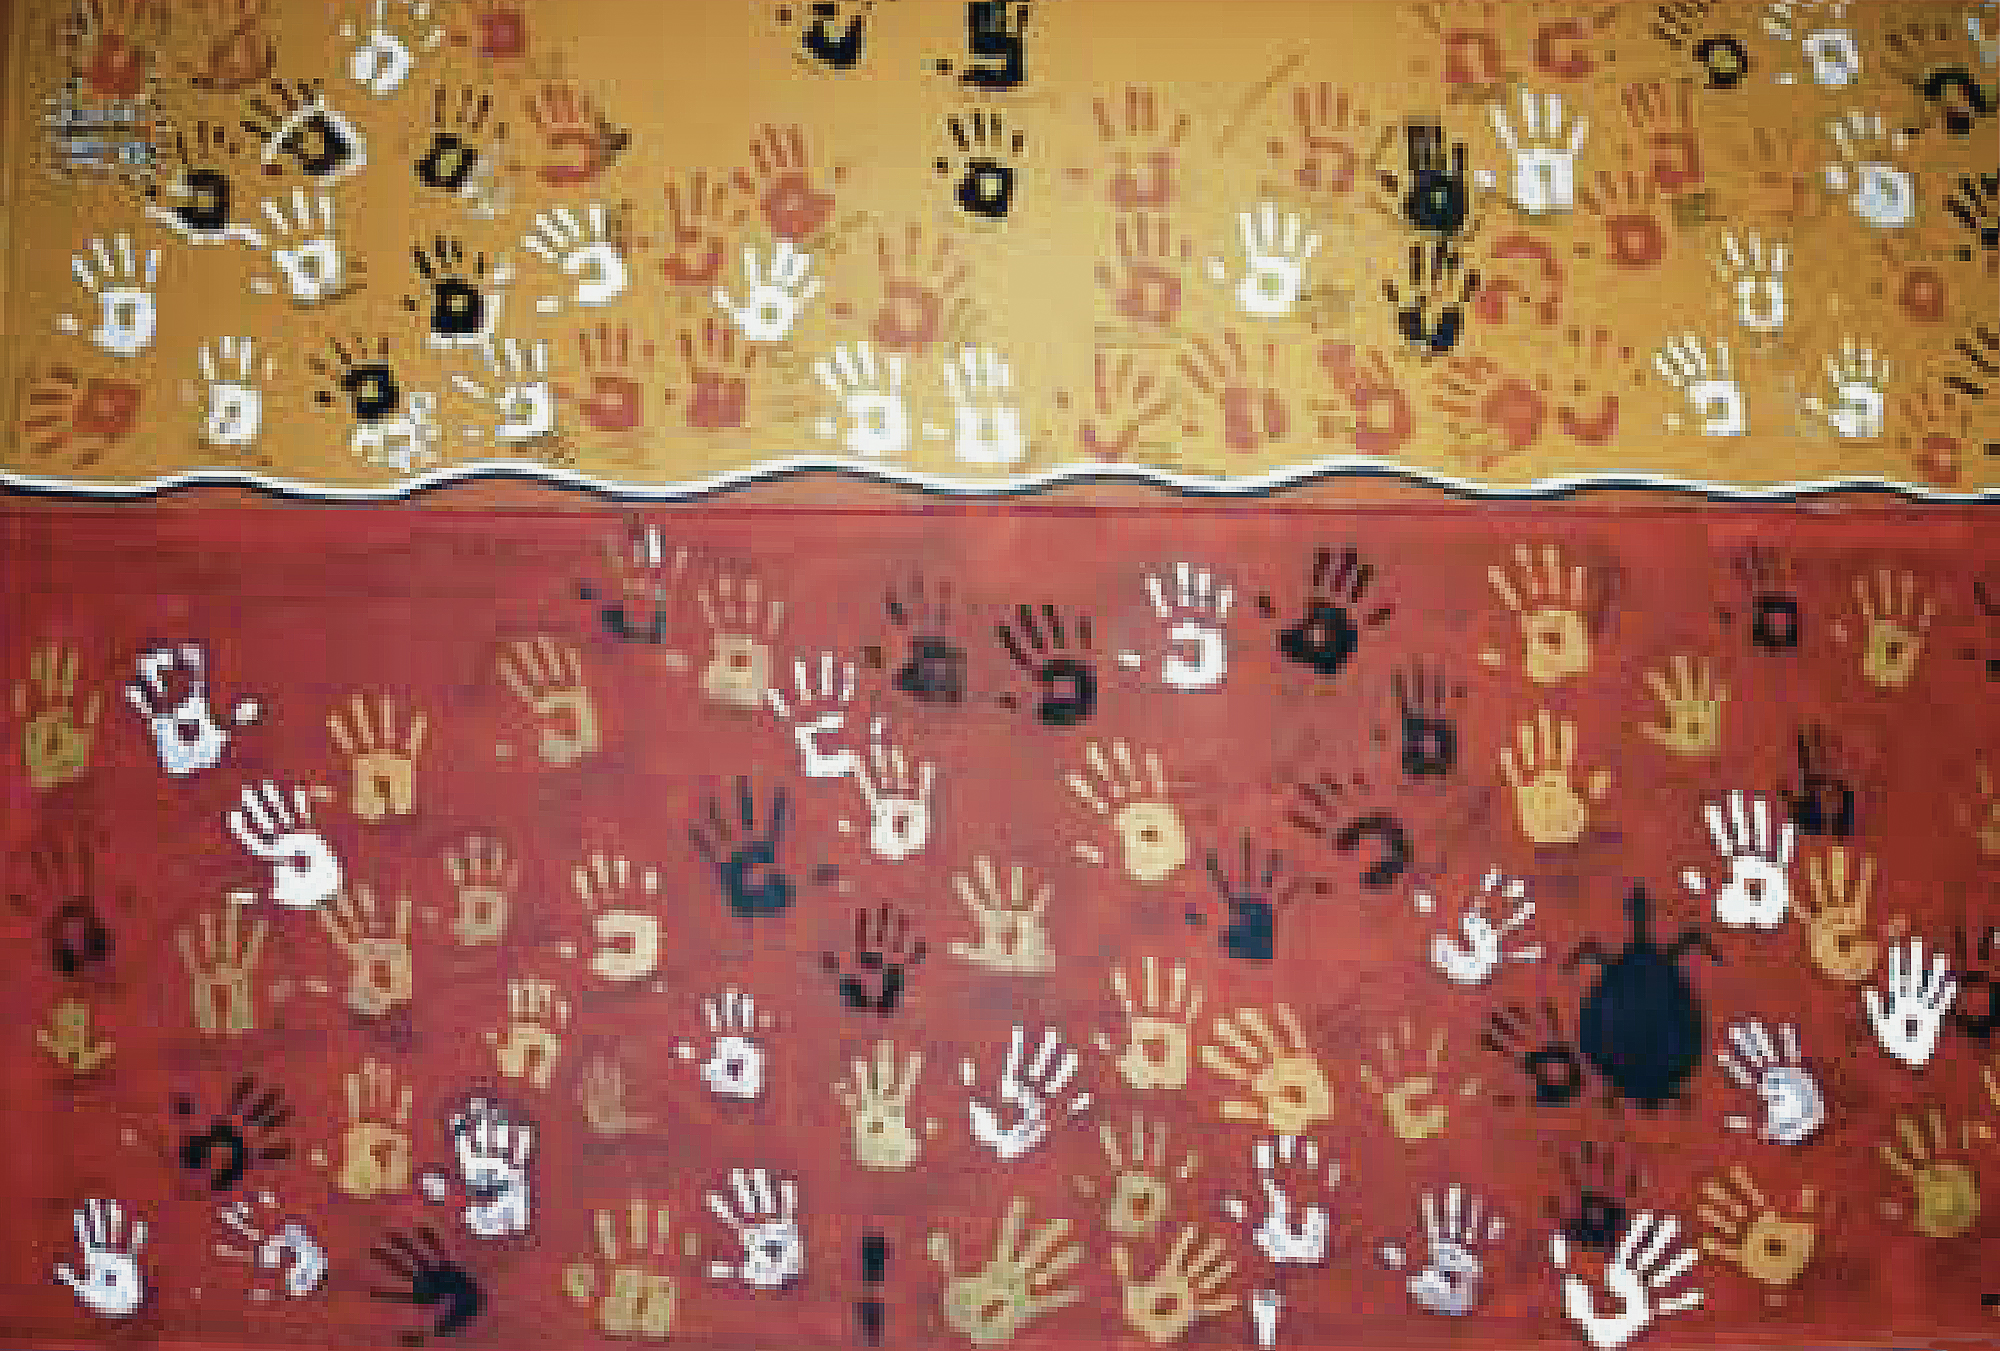 odern handprints of the village inhabitants in an Australian aboriginal school Kendall High School